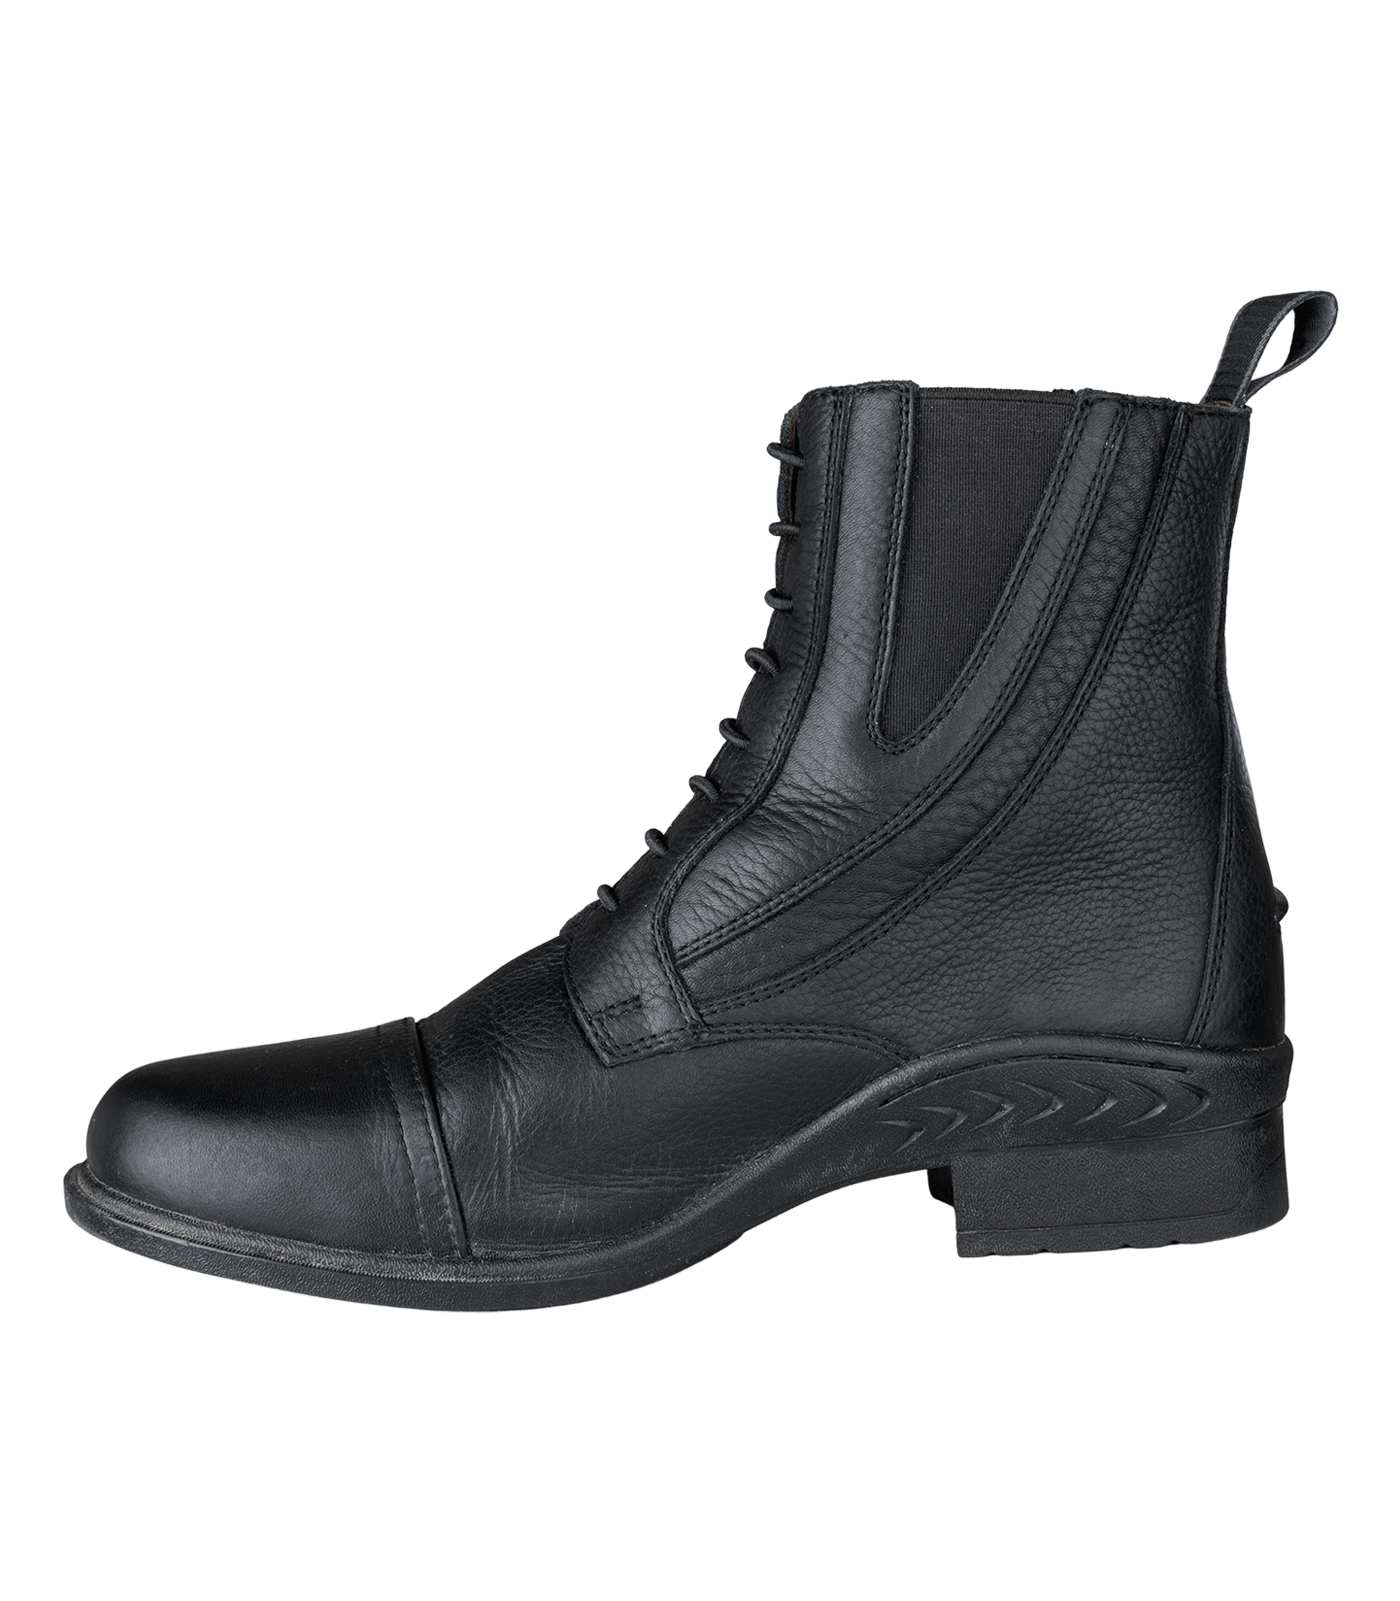 Newcastle Jodhpur Boots